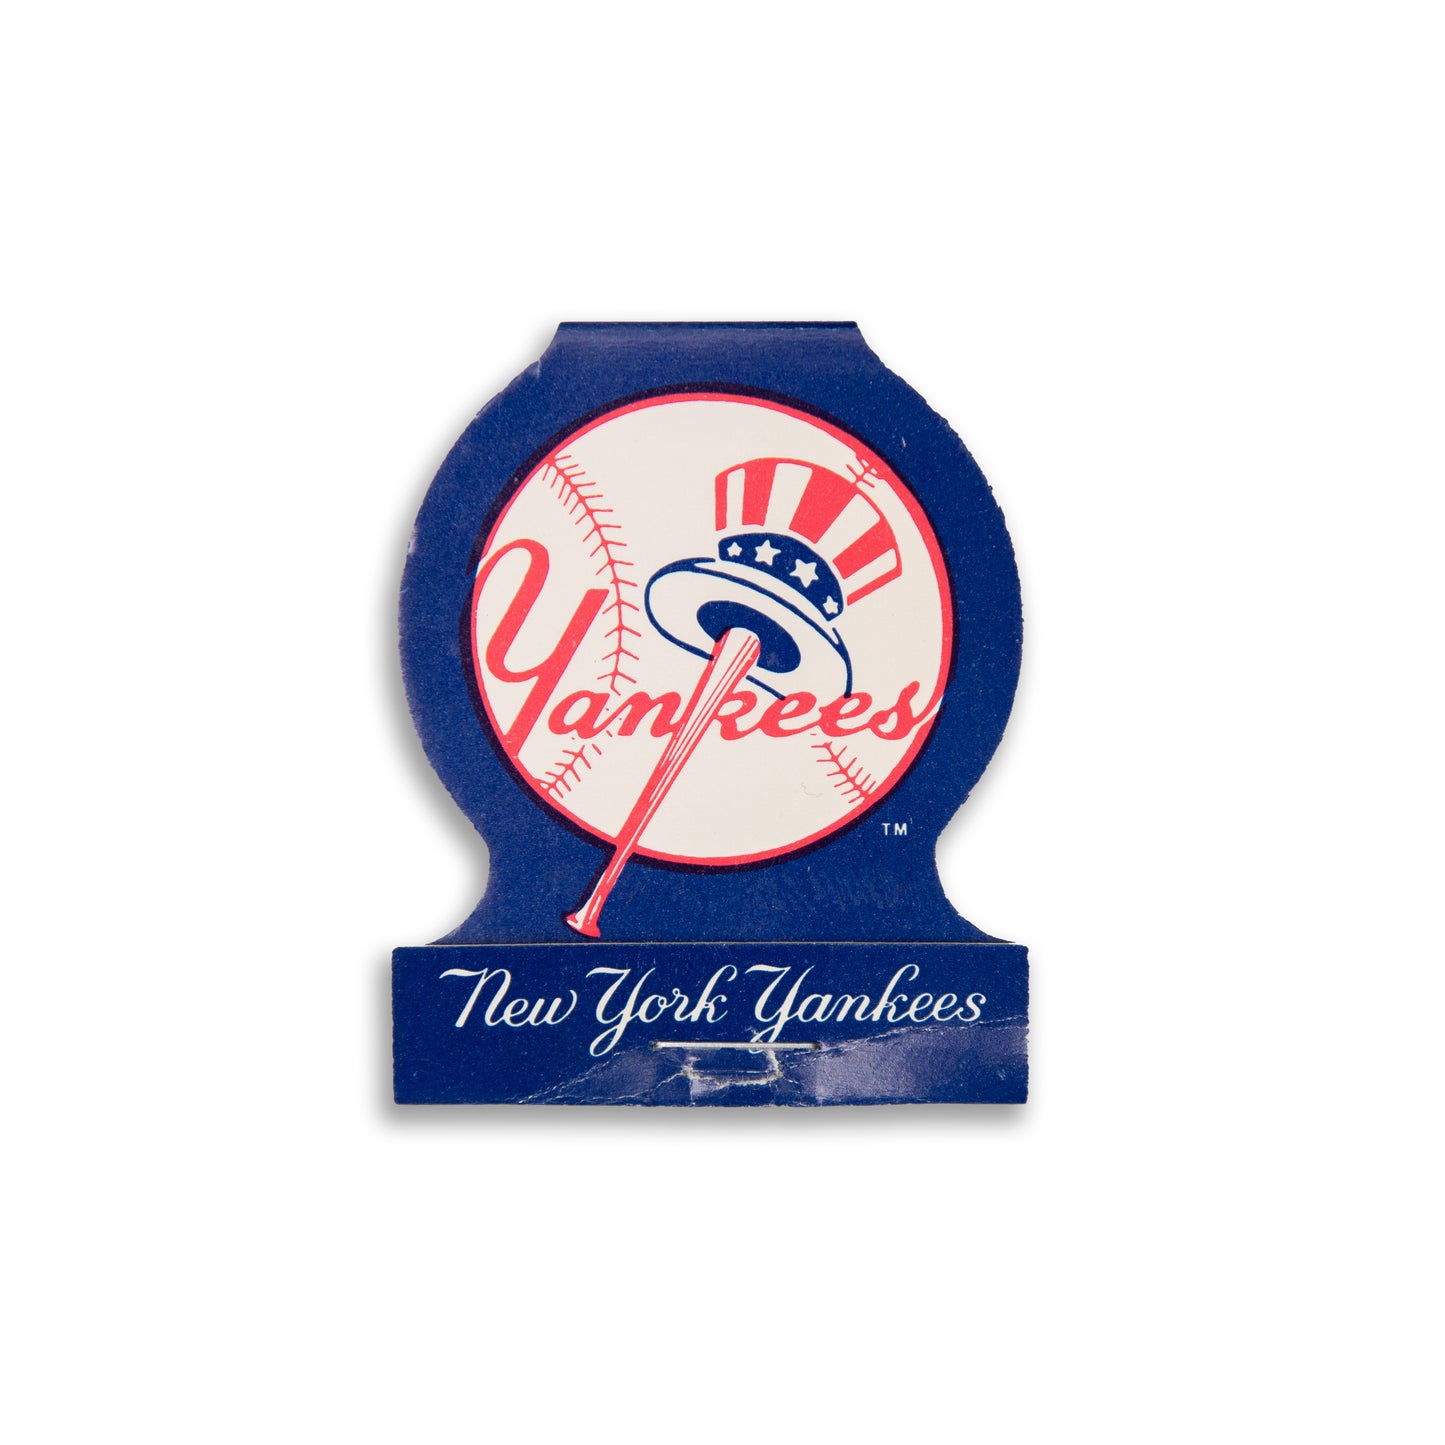 New York Yankees (Vintage)